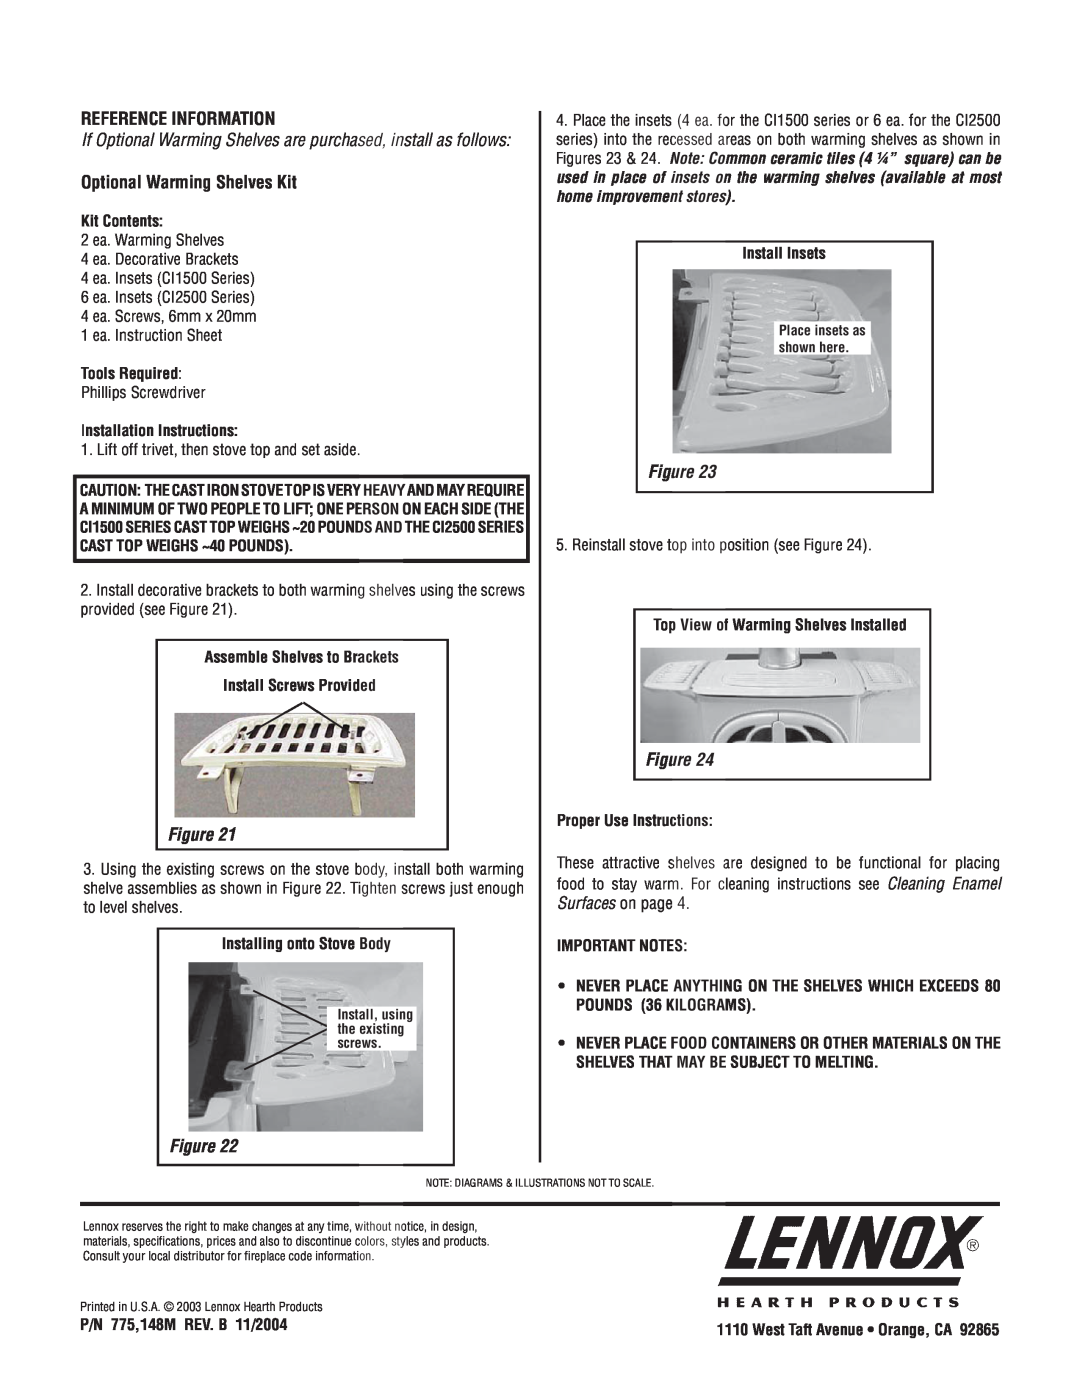 Lennox Hearth CI2500DVF, CI1500DVF manual Reference Information, Optional Warming Shelves Kit 